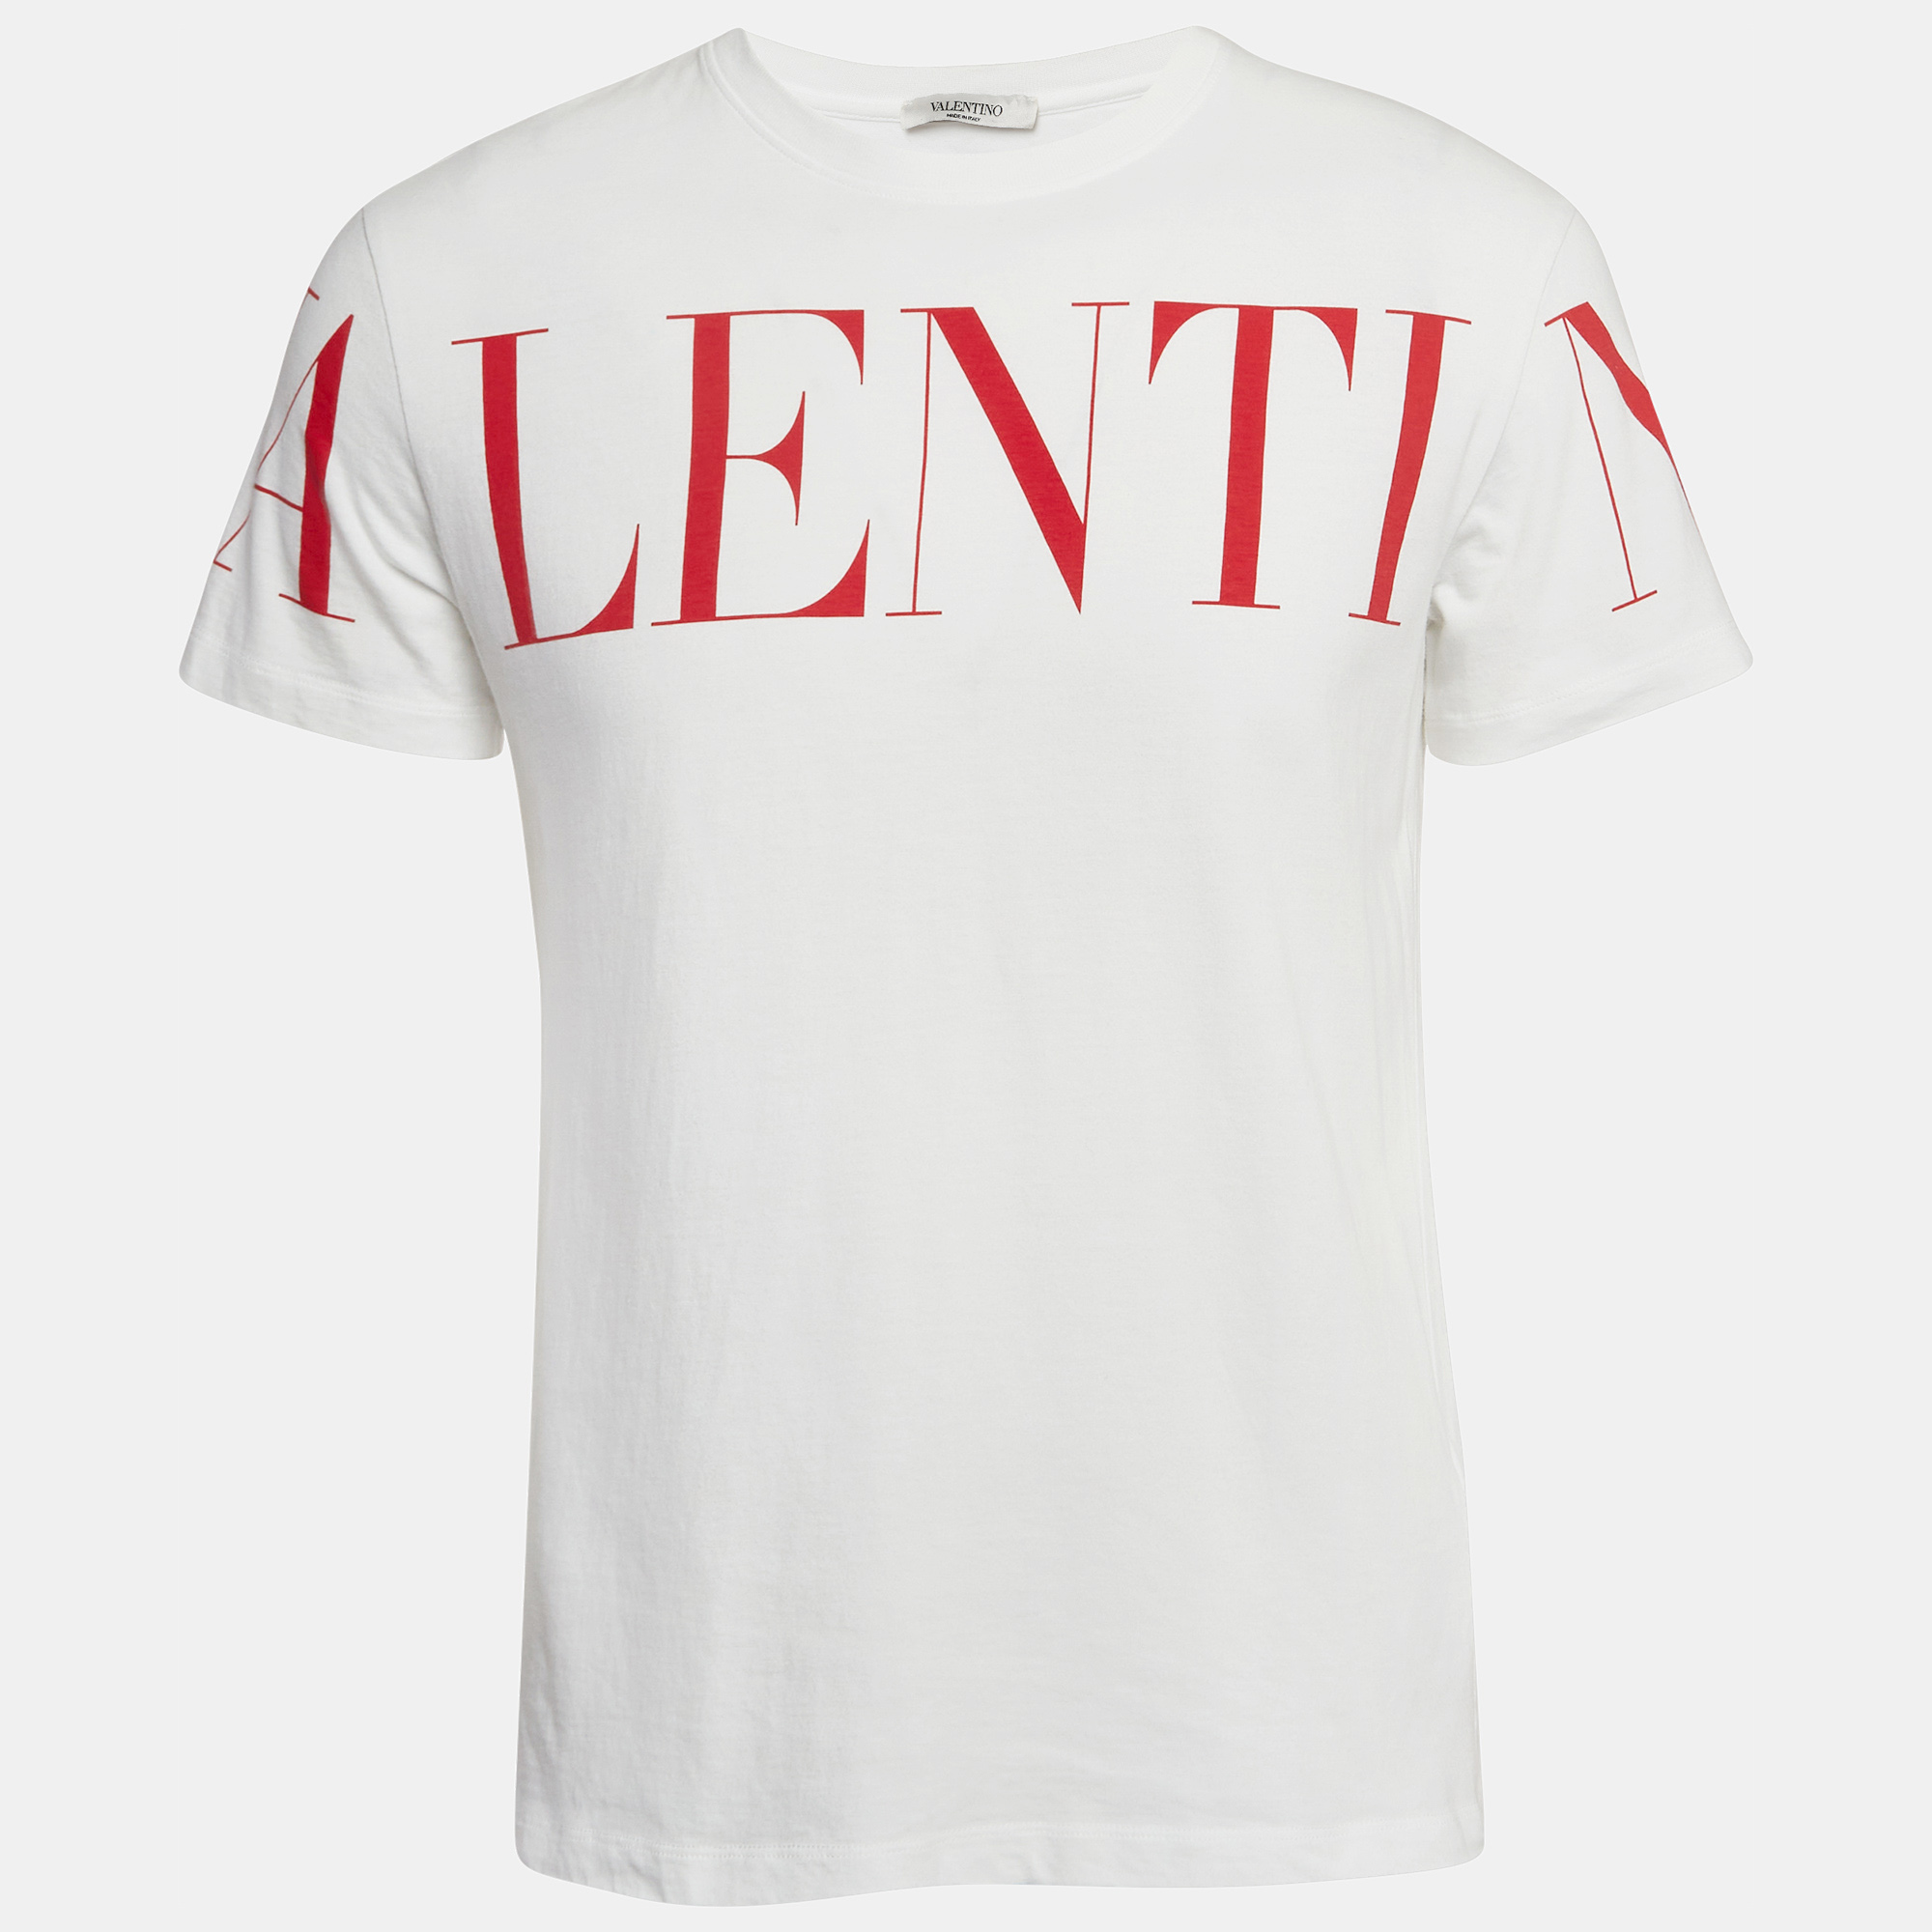 Valentino white/red logo print cotton jersey t-shirt s